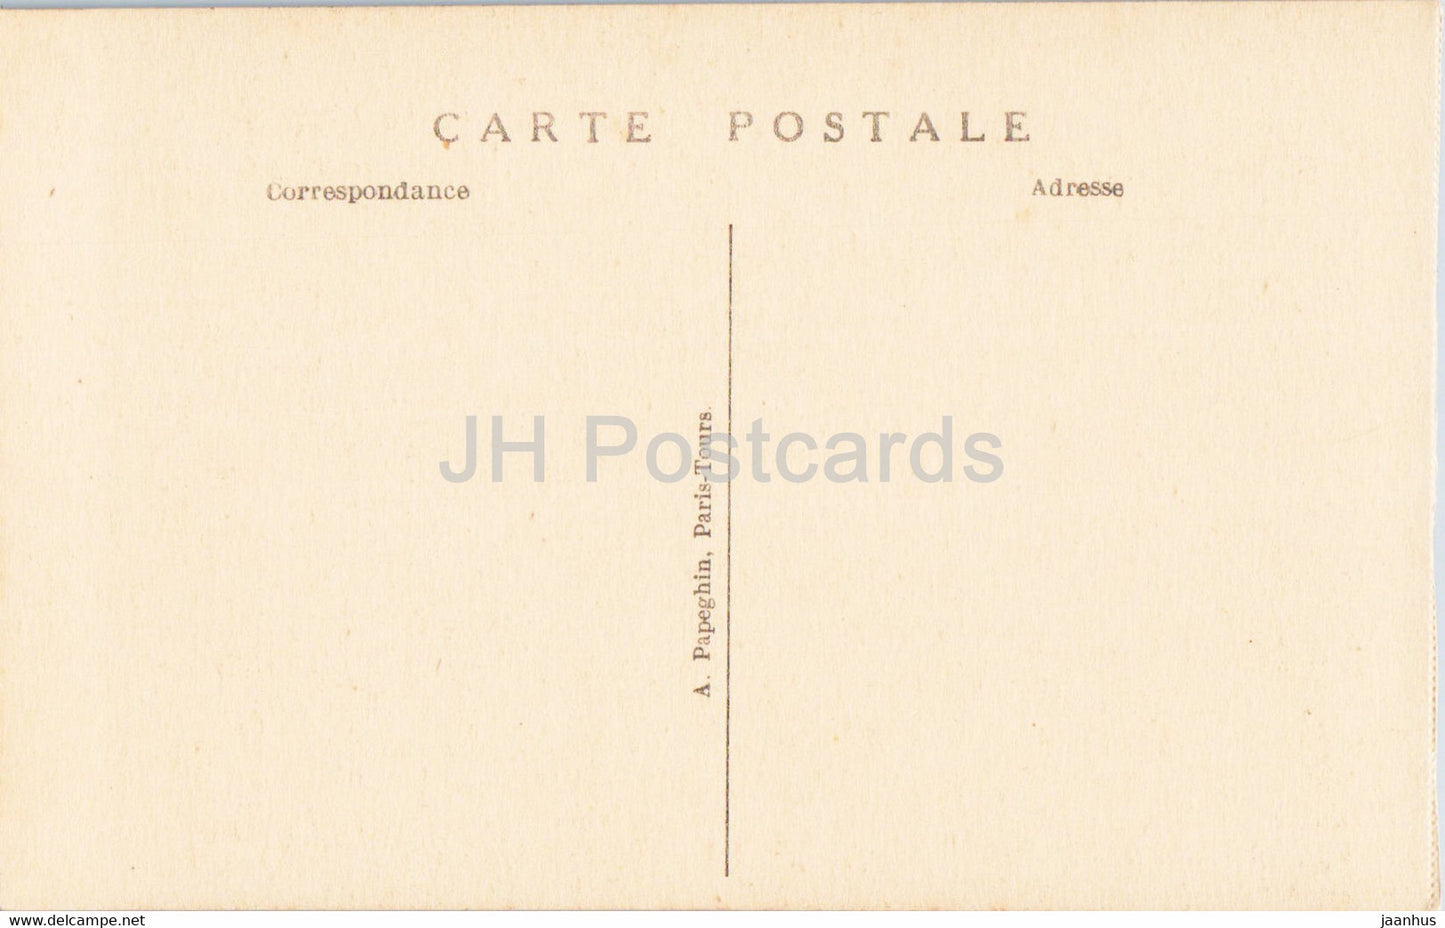 Versailles - Le Parc - Bassin de la Pyramide - 38 - alte Postkarte - Frankreich - unbenutzt